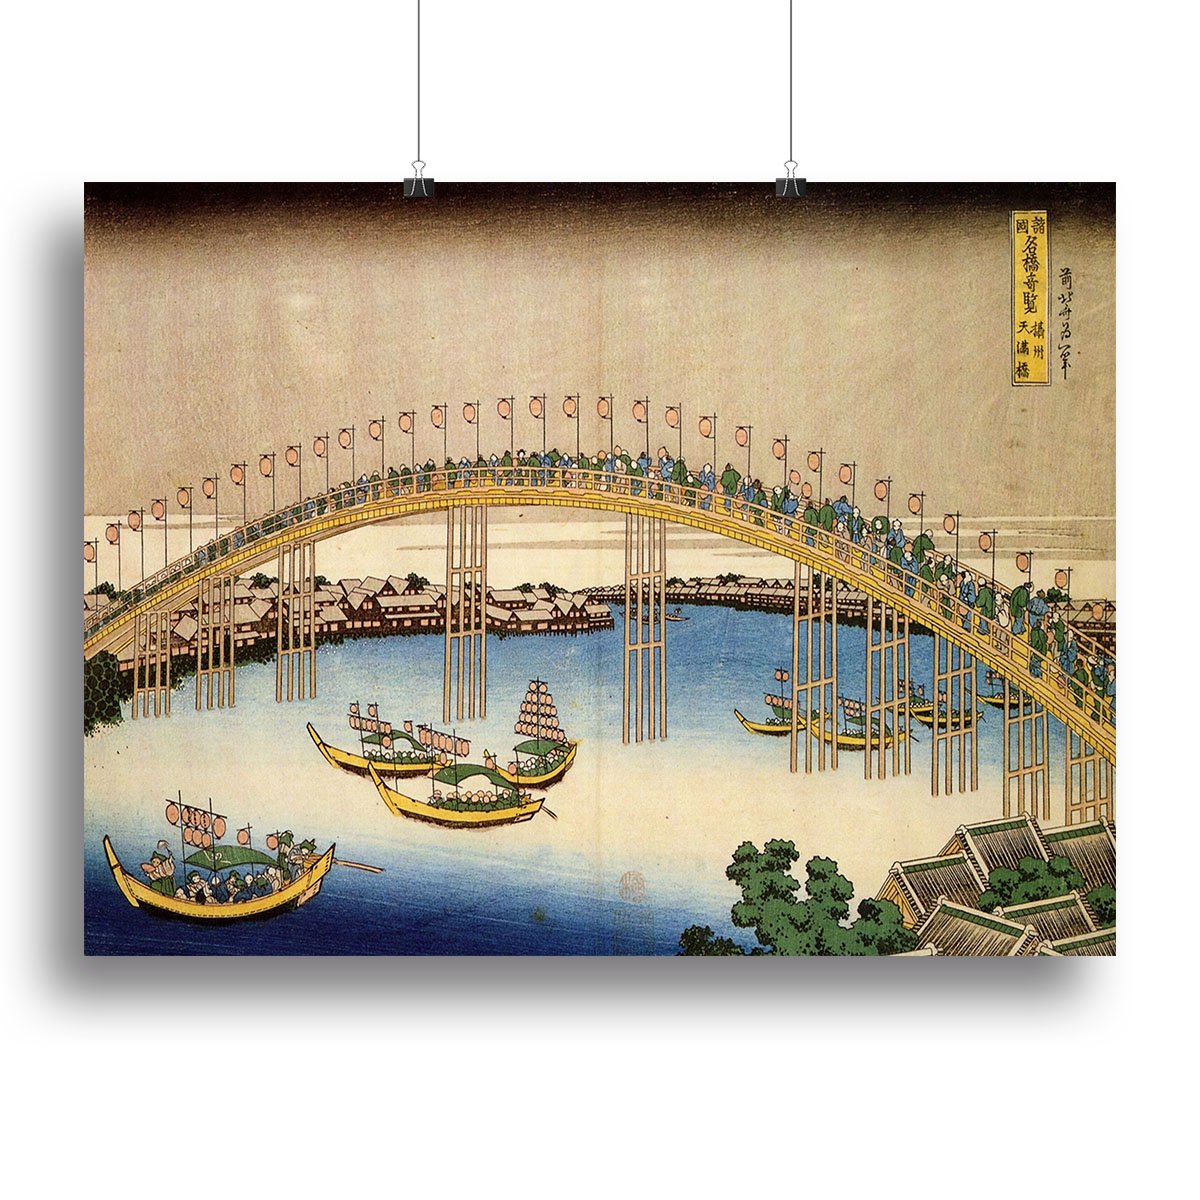 Tenma bridge by Hokusai Canvas Print or Poster